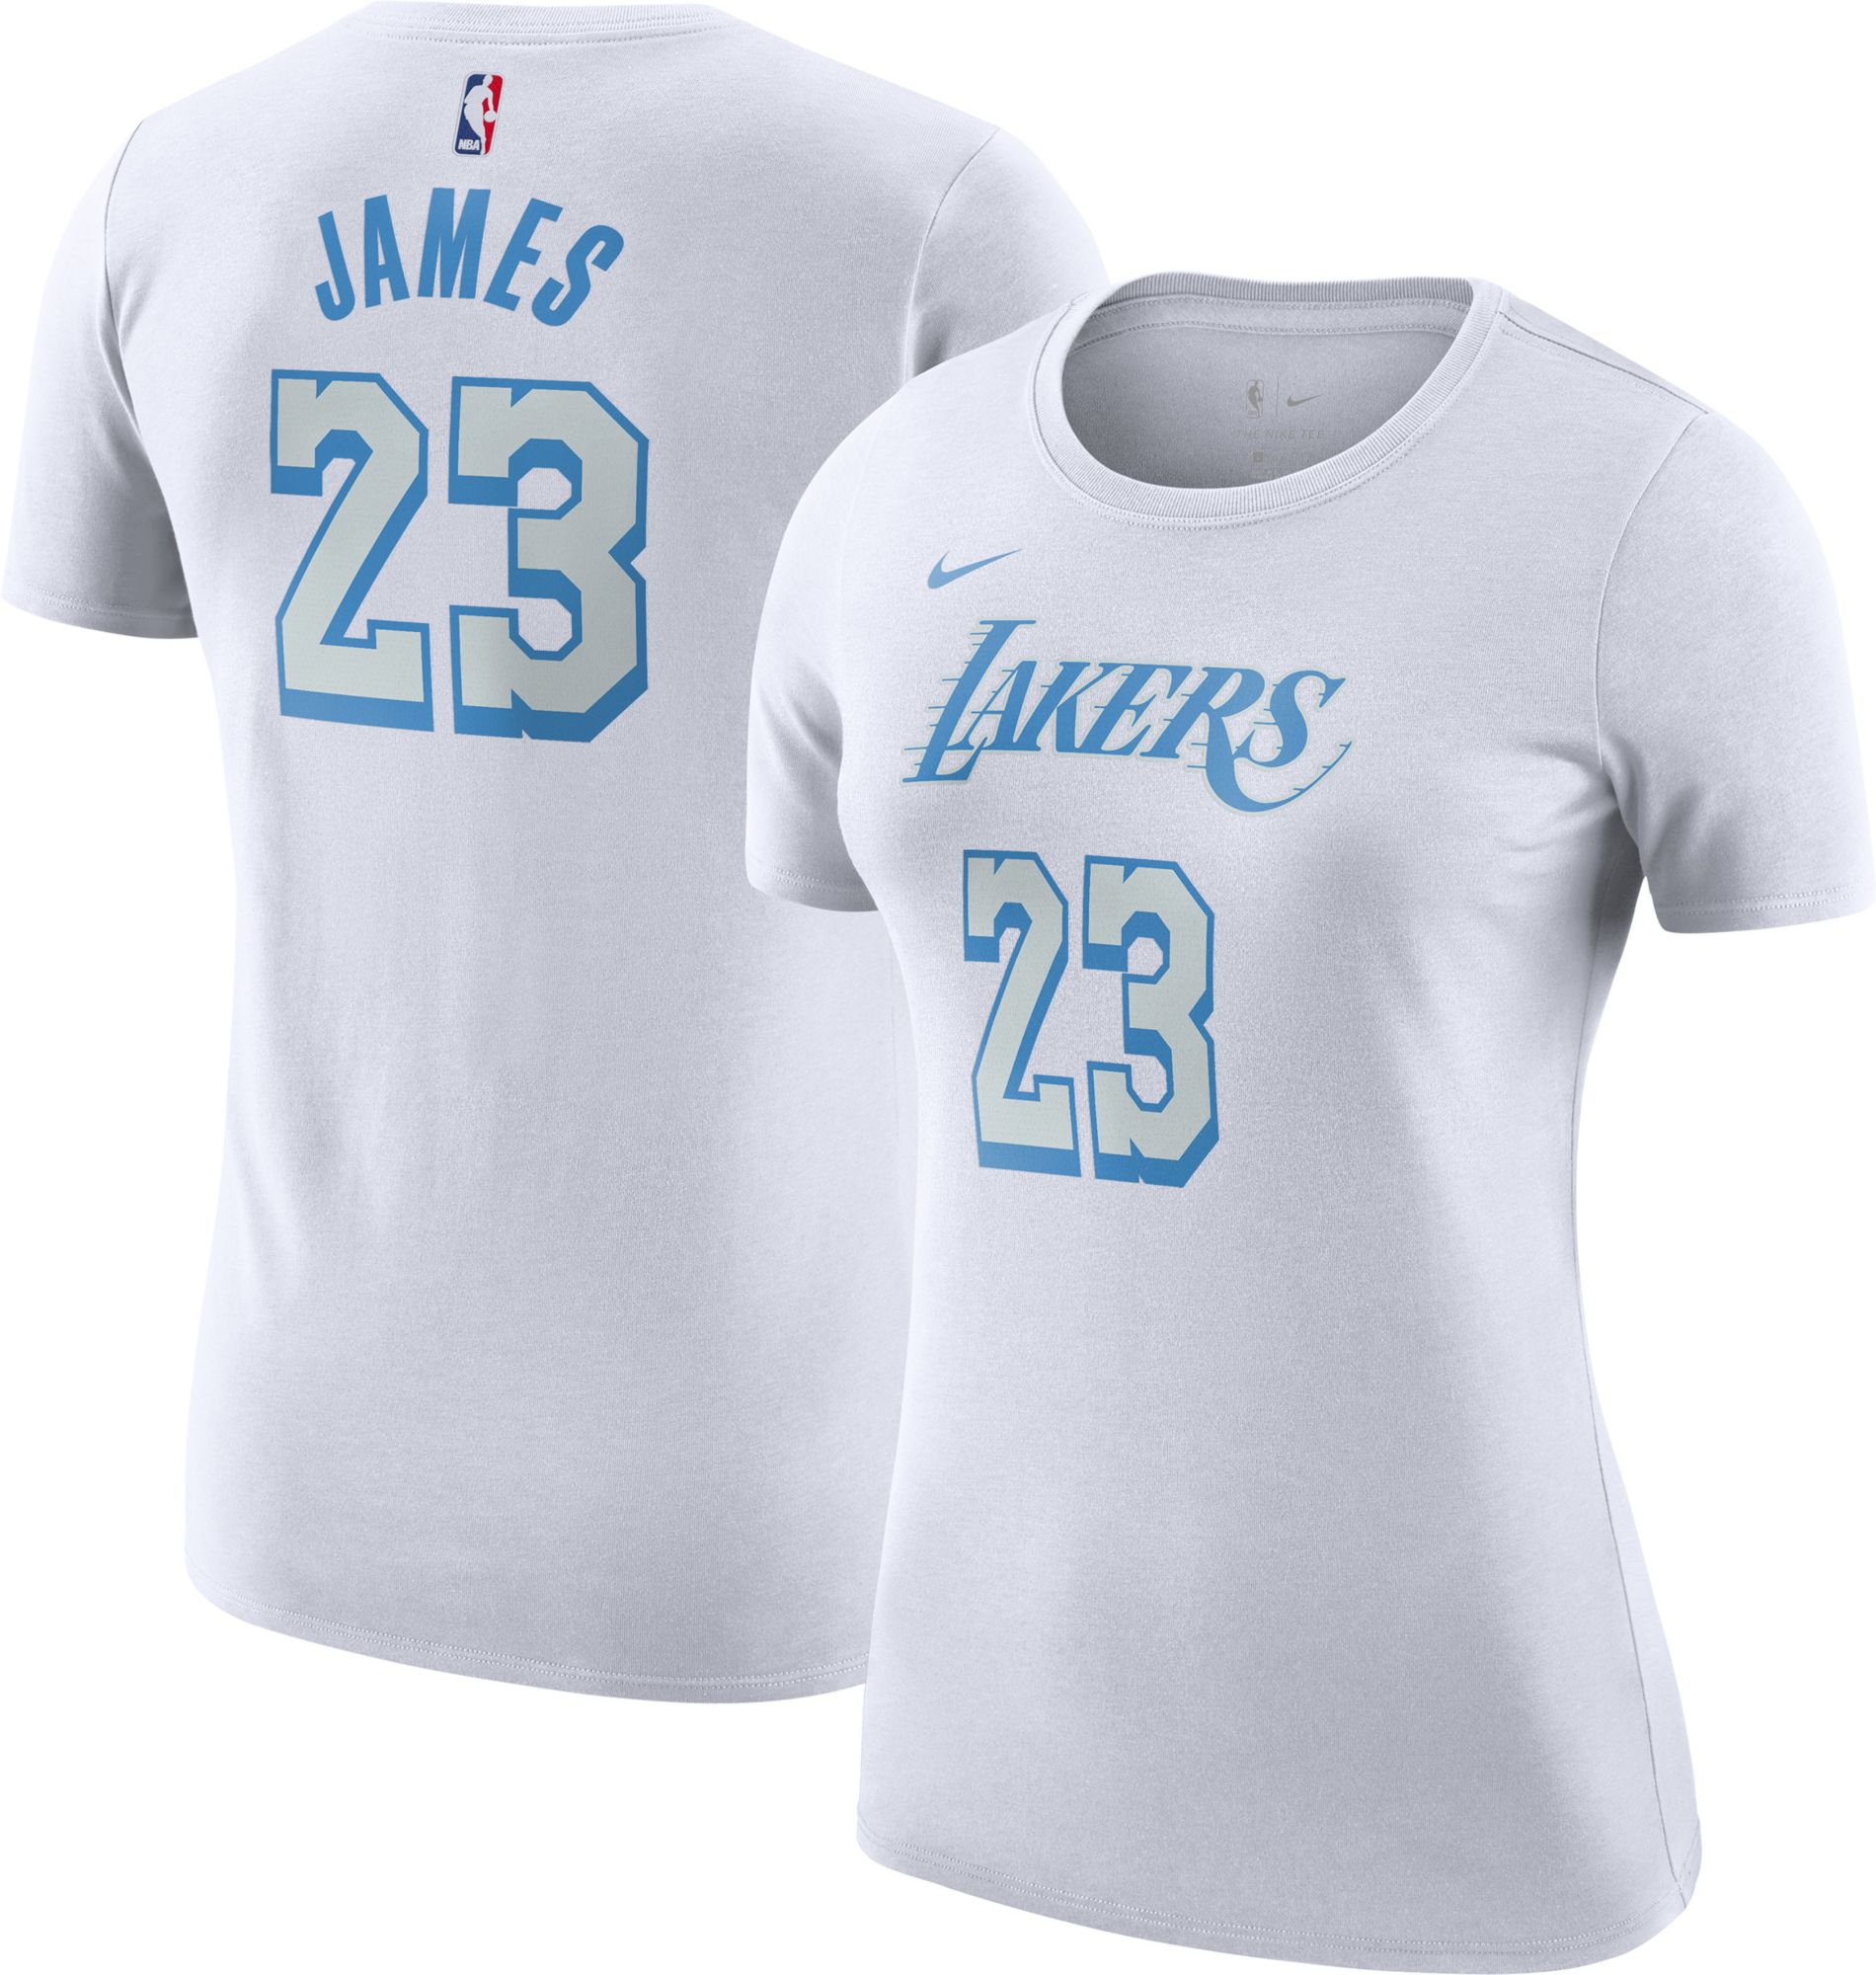 Shop Los Angeles Lakers Women's Nike NBA T-Shirt